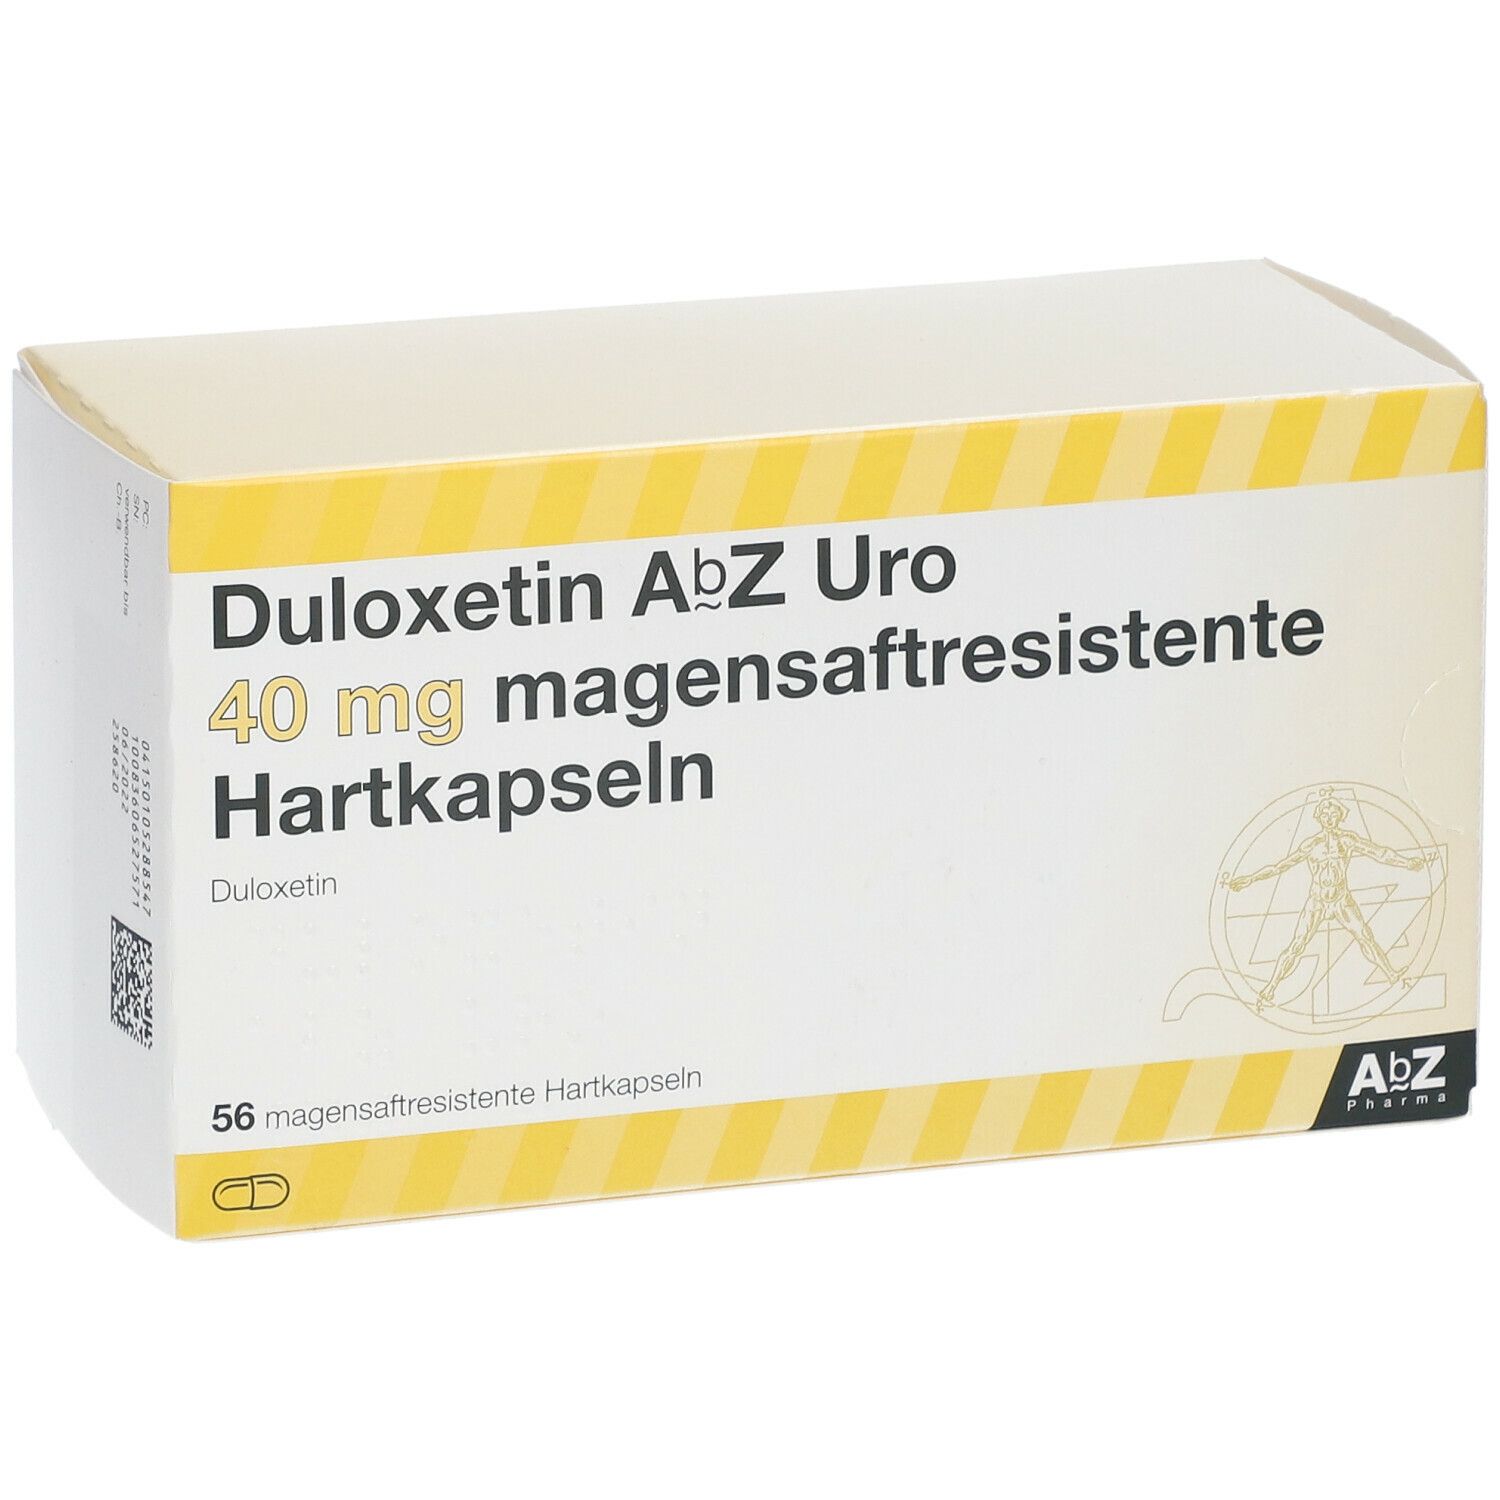 Duloxetin AbZ Uro 40 mg